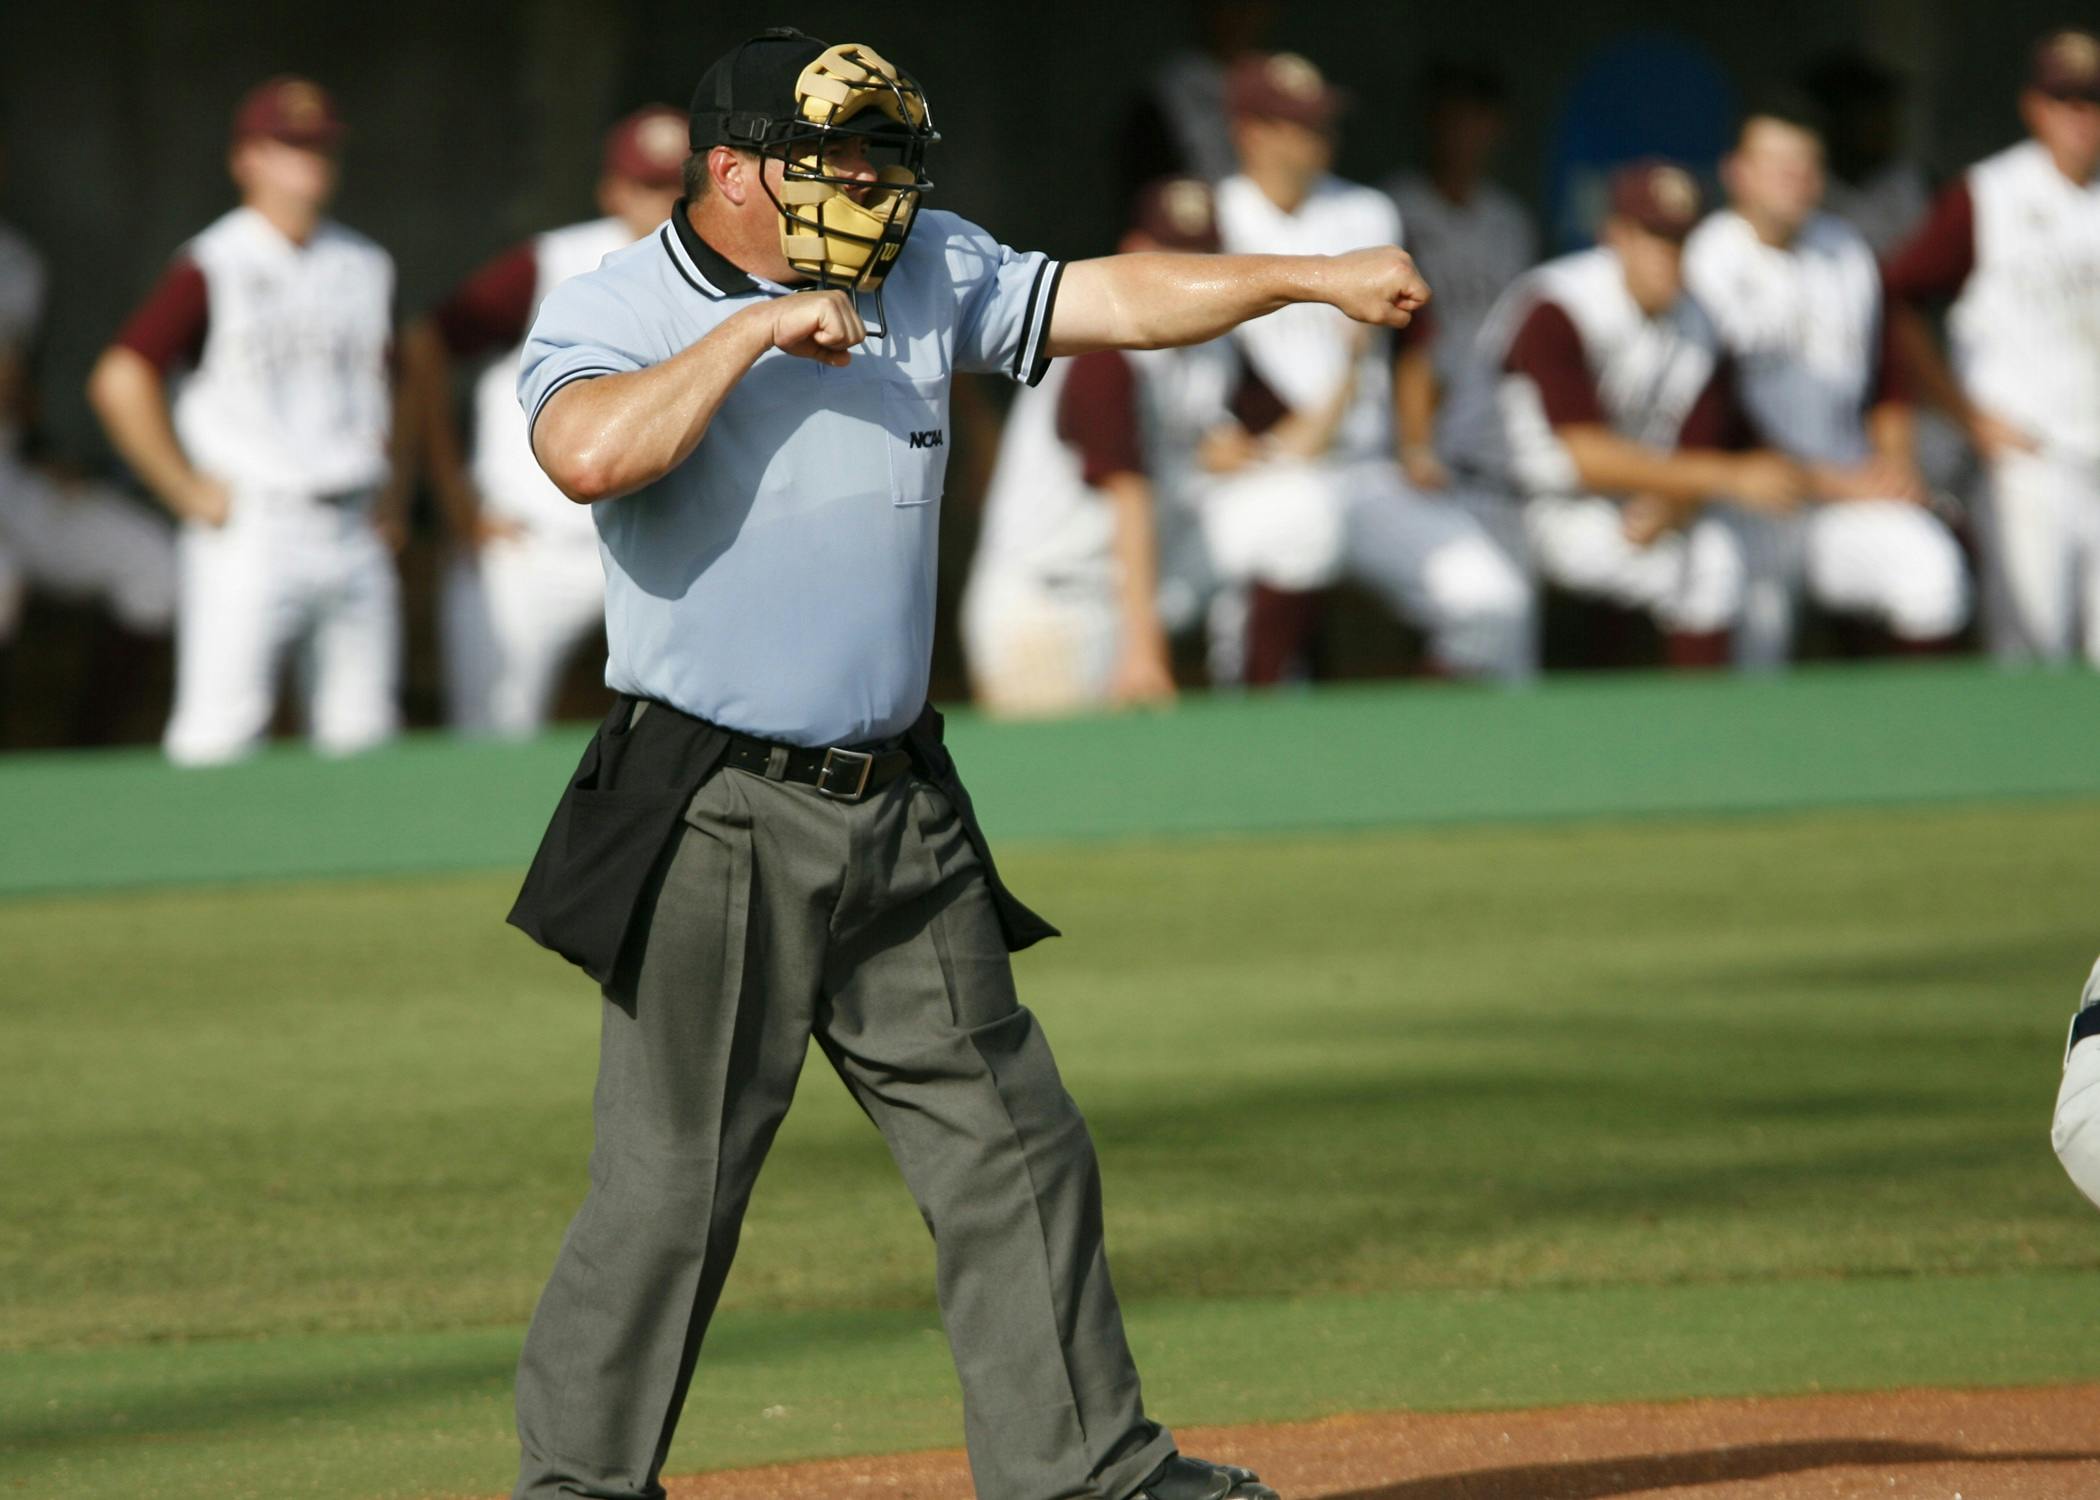 Baseball Umpire Uniform History - SportsRec